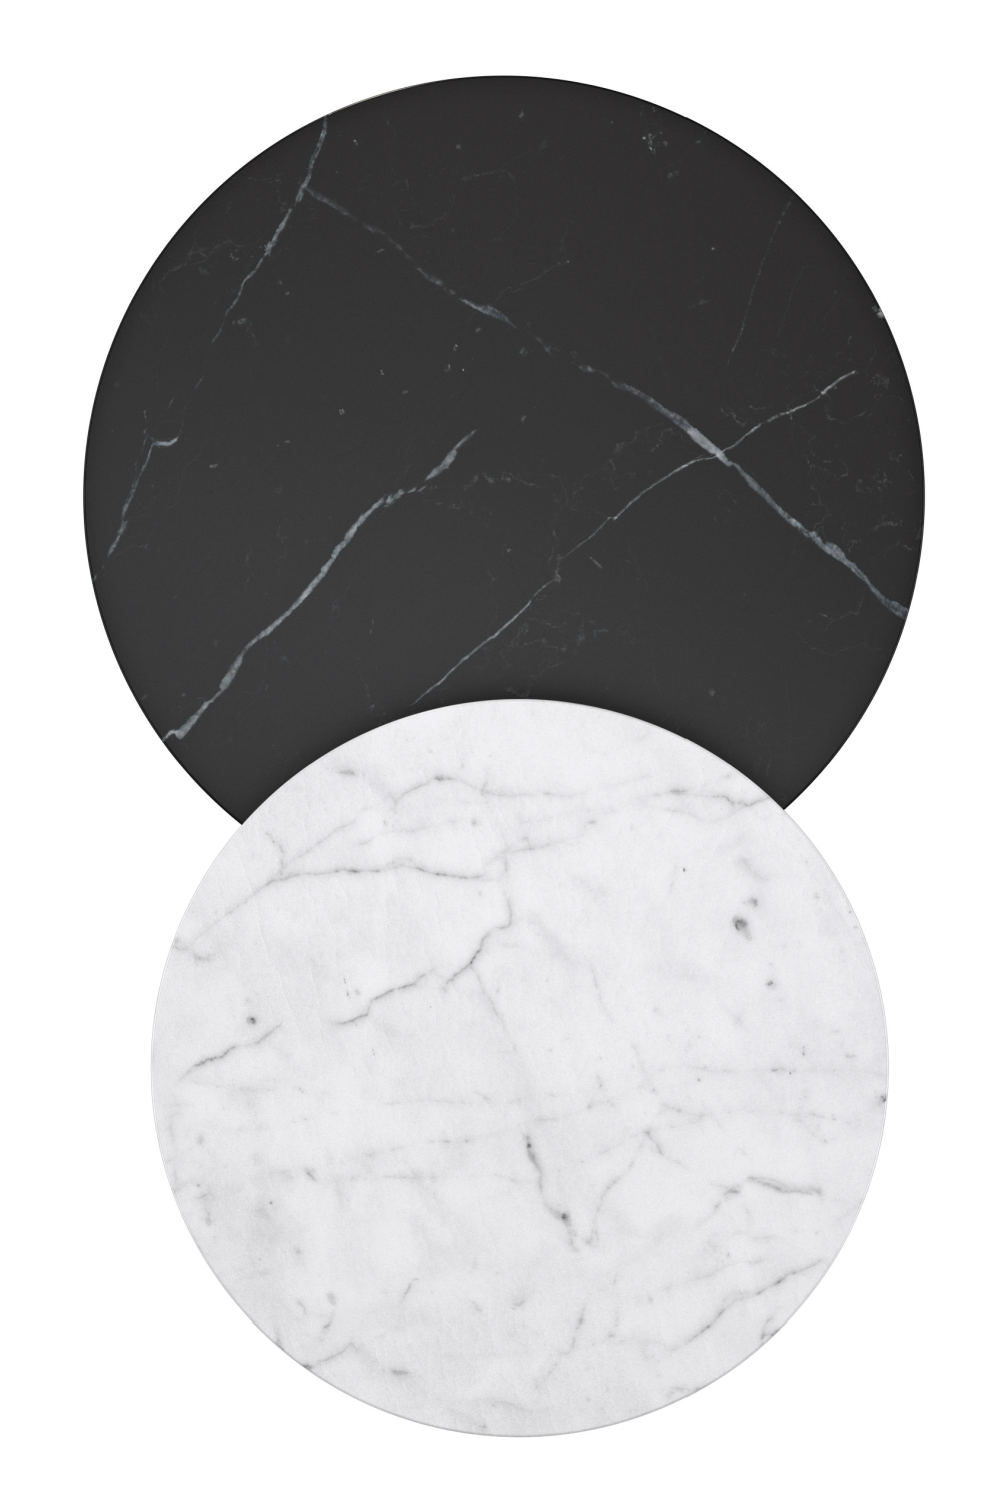 Black Marble Spot Table | Caracole La Moda | Oroa.com